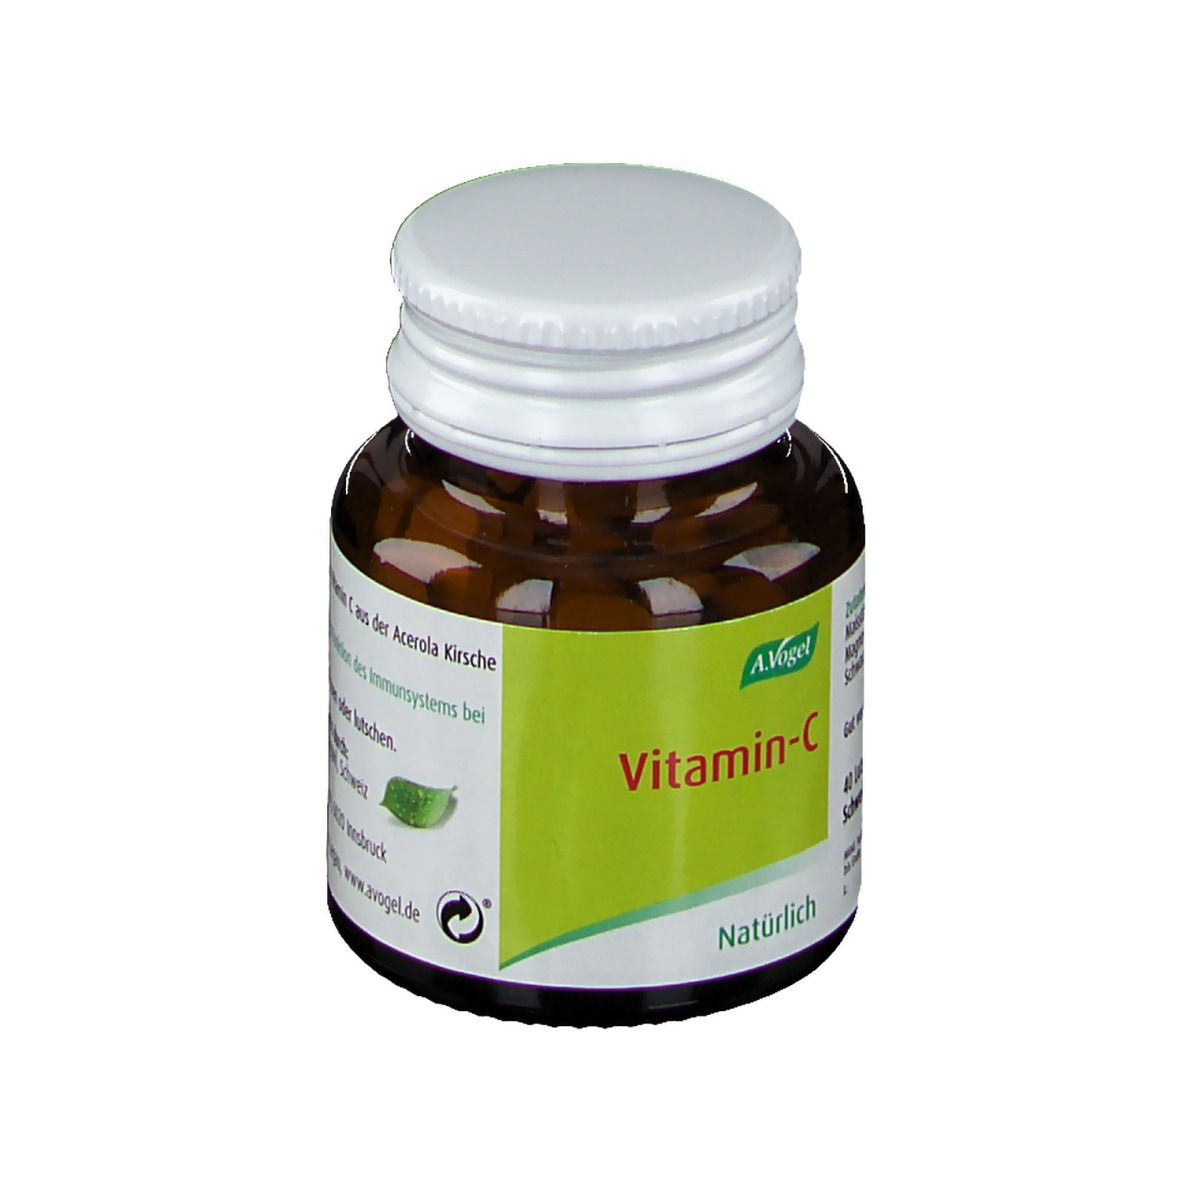 A. Vogel Vitamin C Lutschtabletten